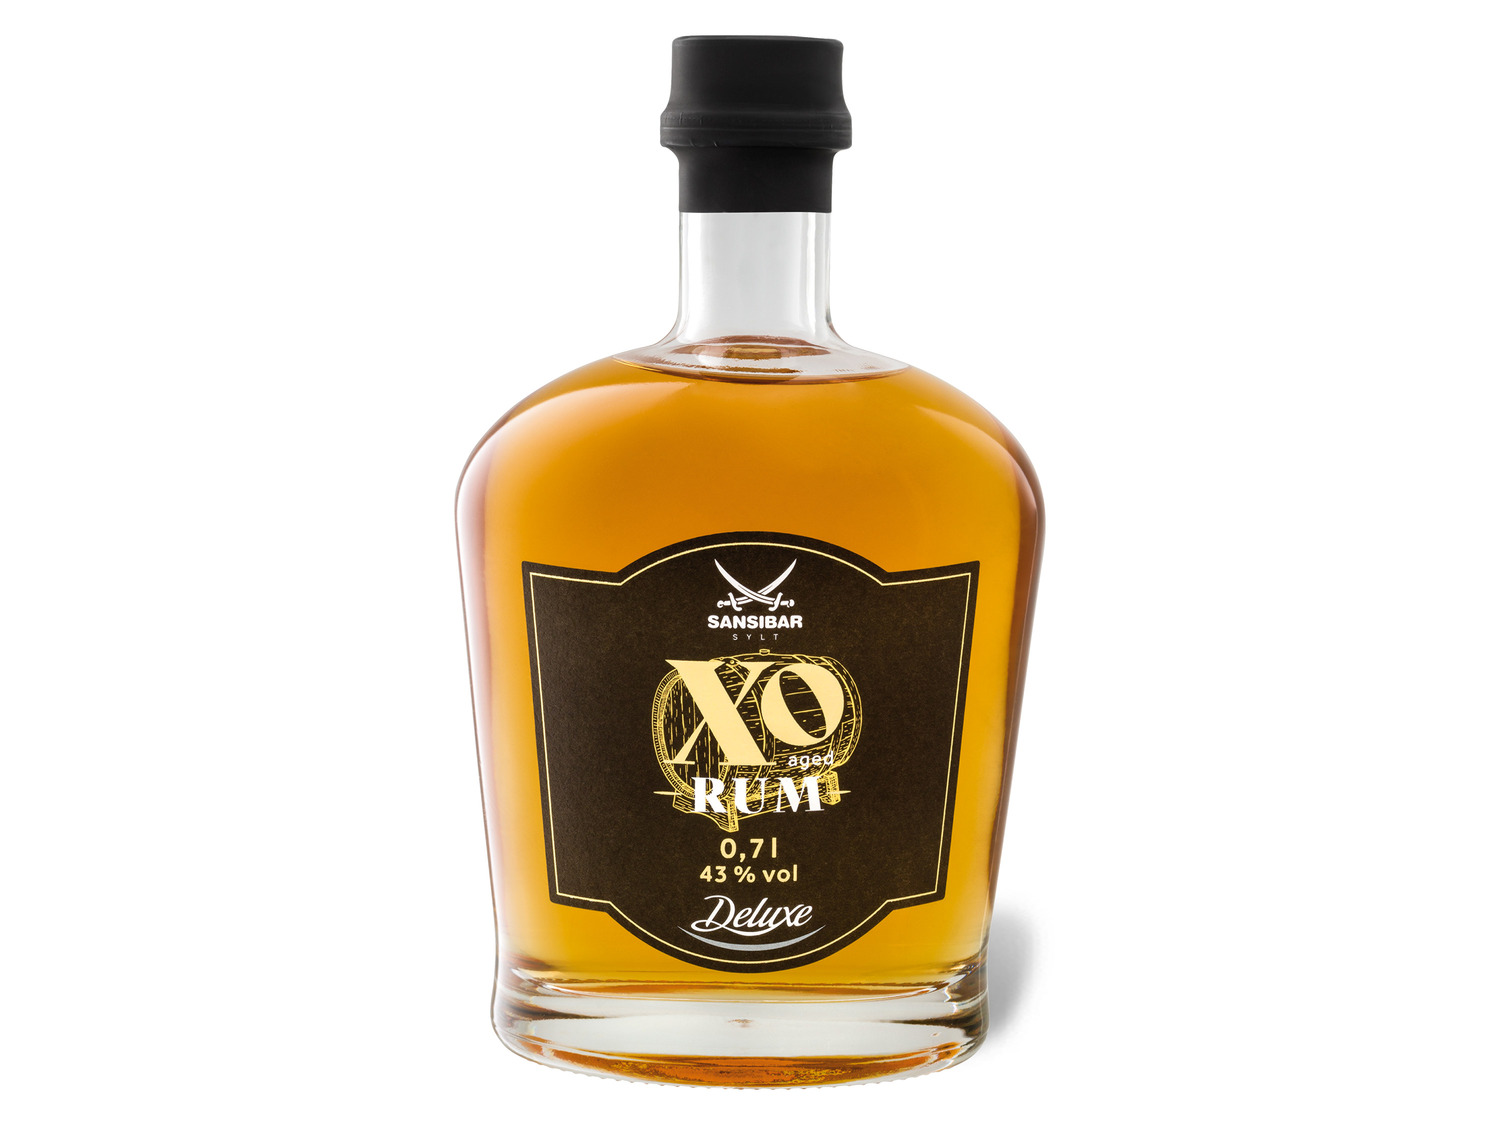 Sansibar Deluxe XO Vol Aged Rum 43% LIDL 